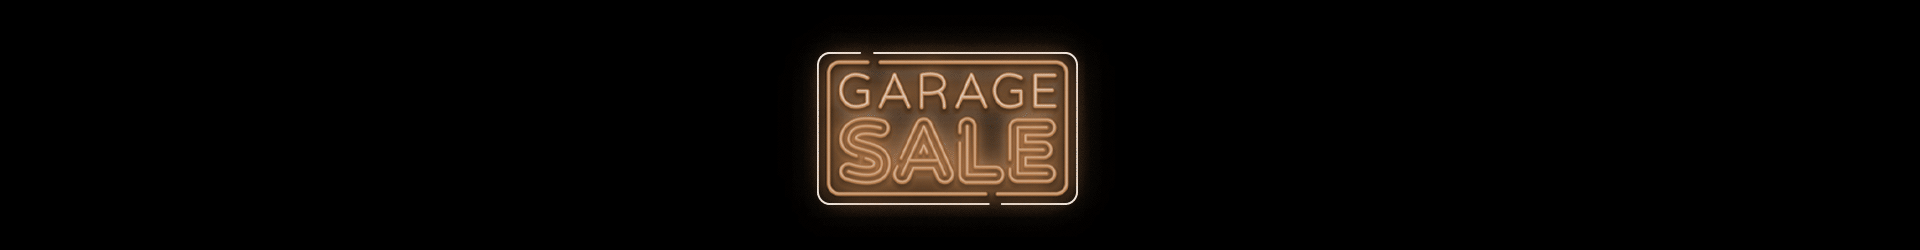 garage-sale-1920x250.gif (43 KB)